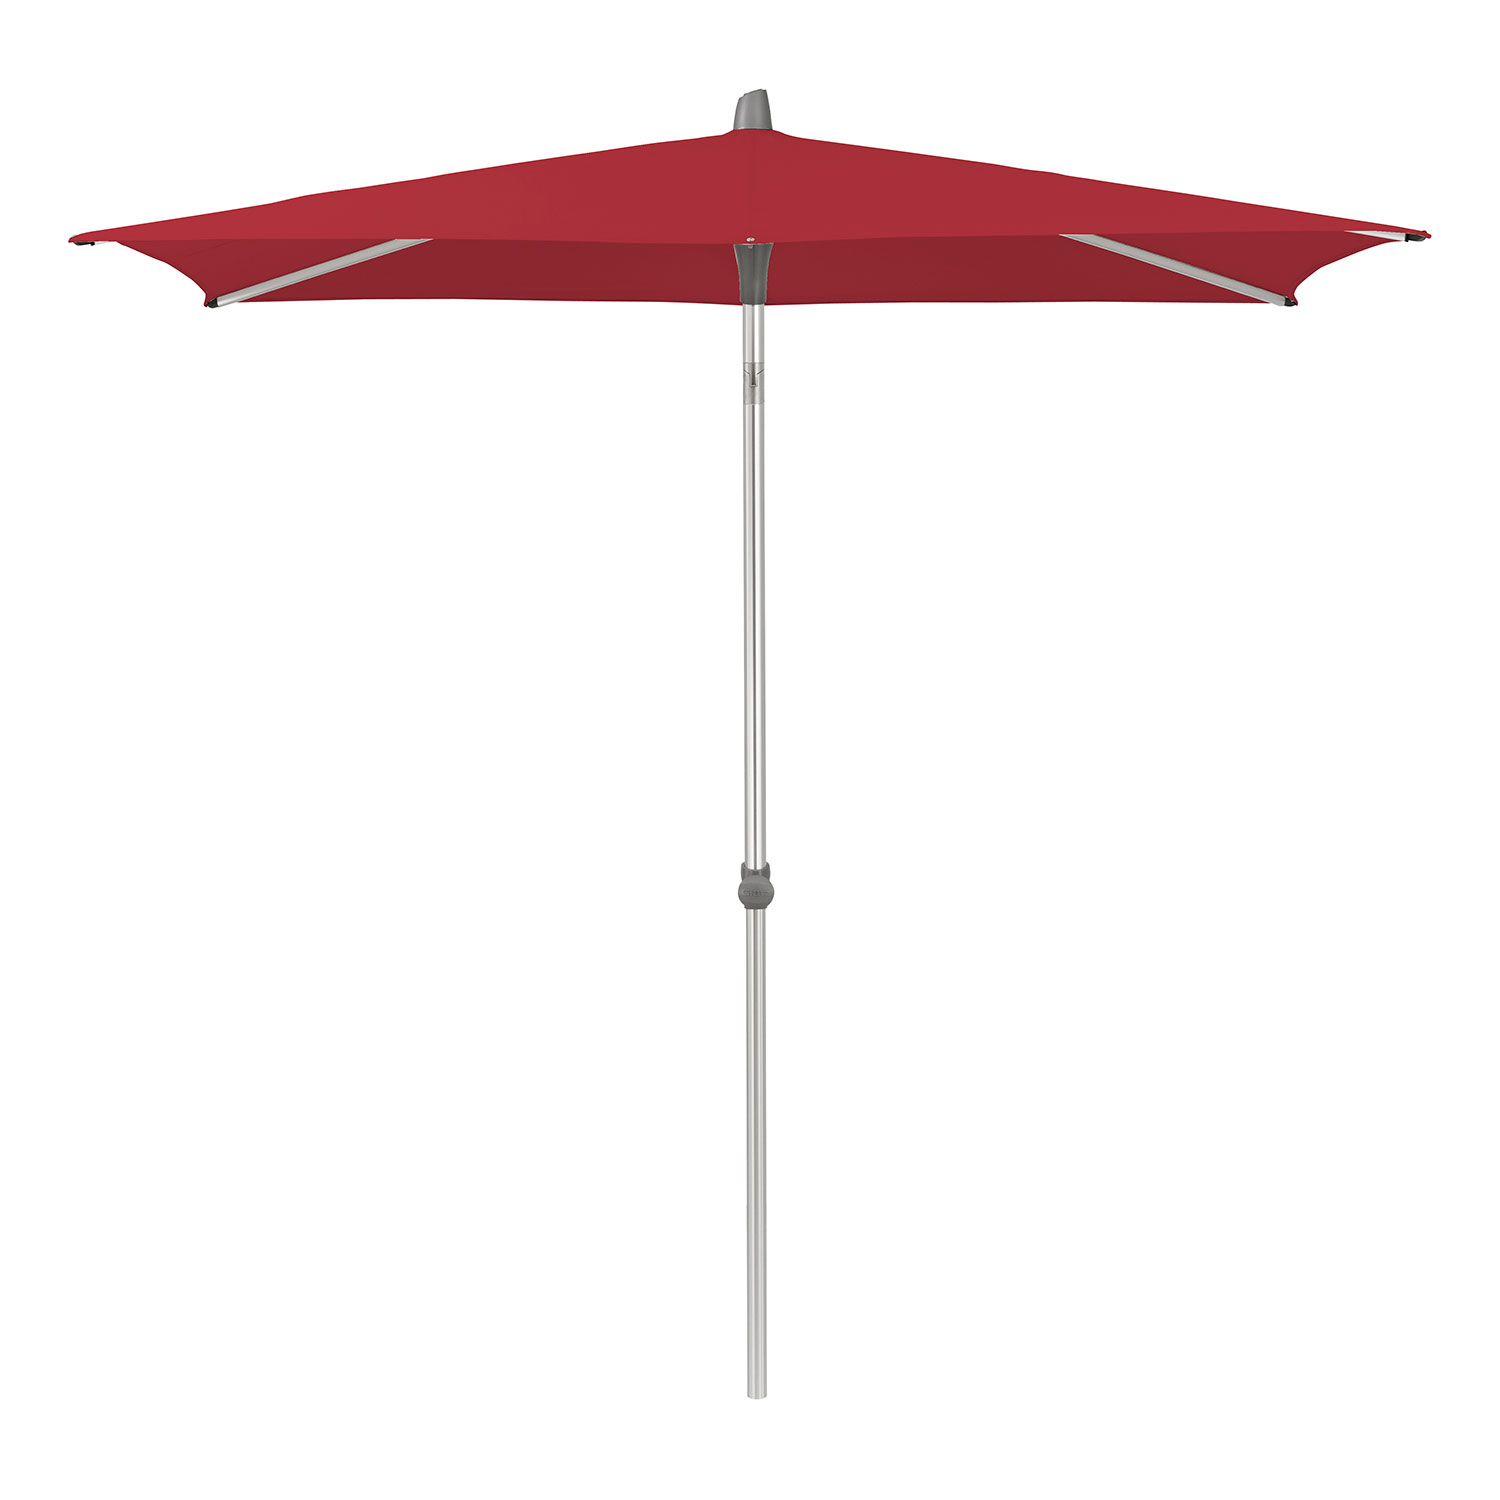 Alu-smart parasoll 250×200 cm kat.5 646 rubino